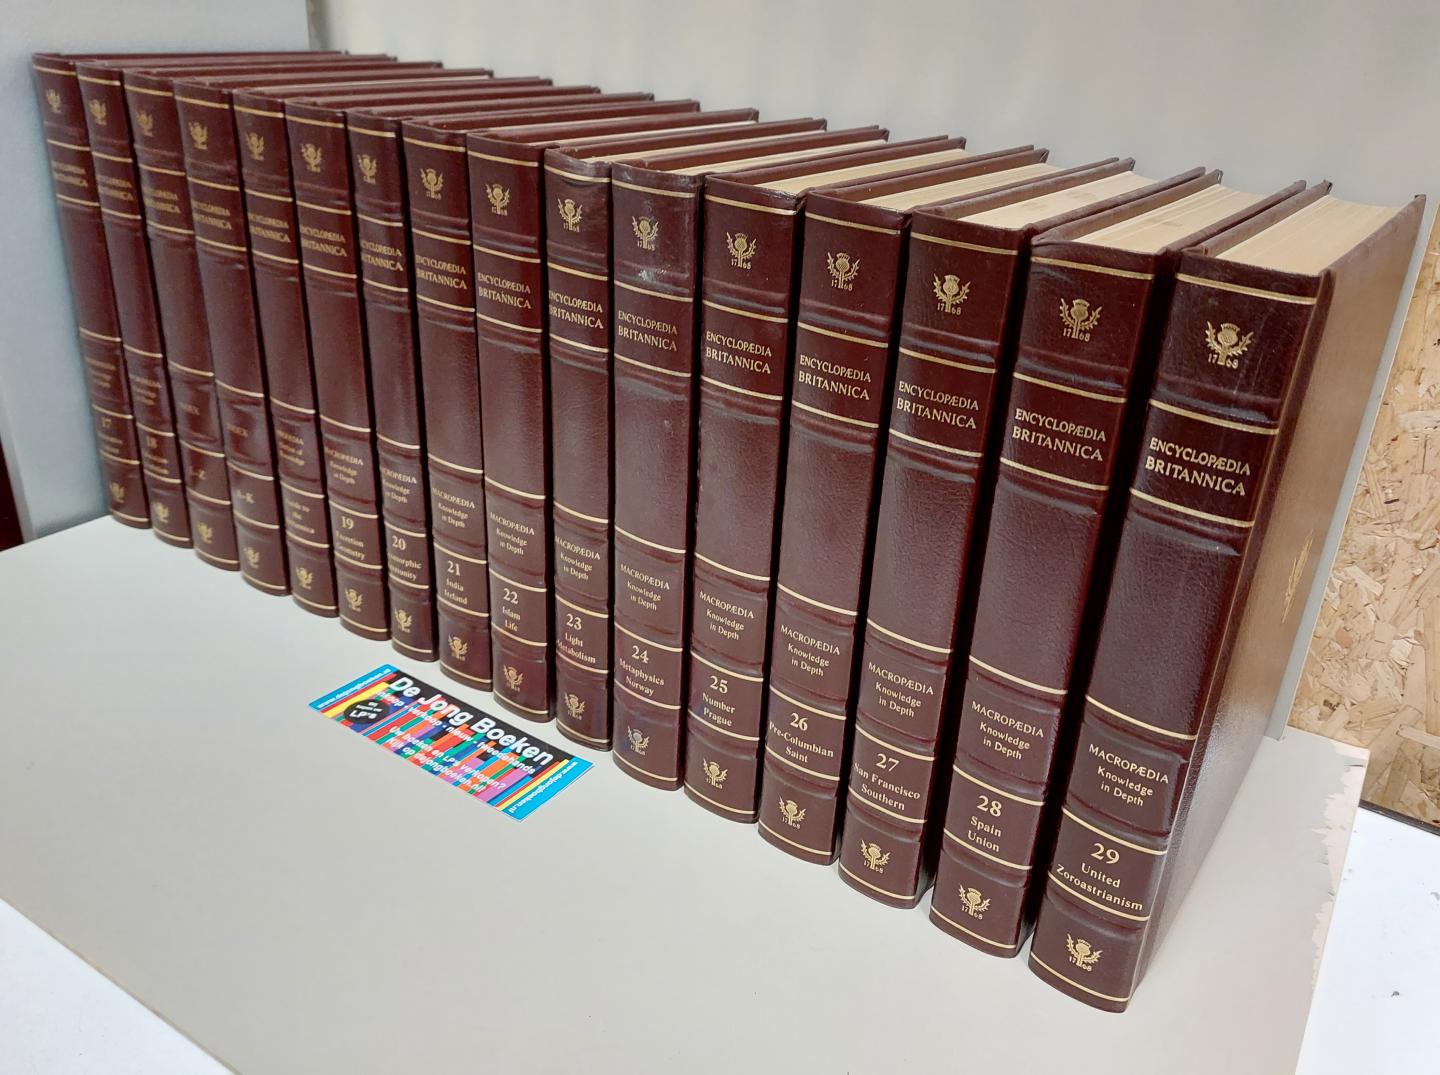 Encyclopaedia Brittanica - THE NEW ENCYCLOPAEDIA BRITTANICA 15th edition 29 + 2 index + 1 guide to the Brittanica = 32 volumes!